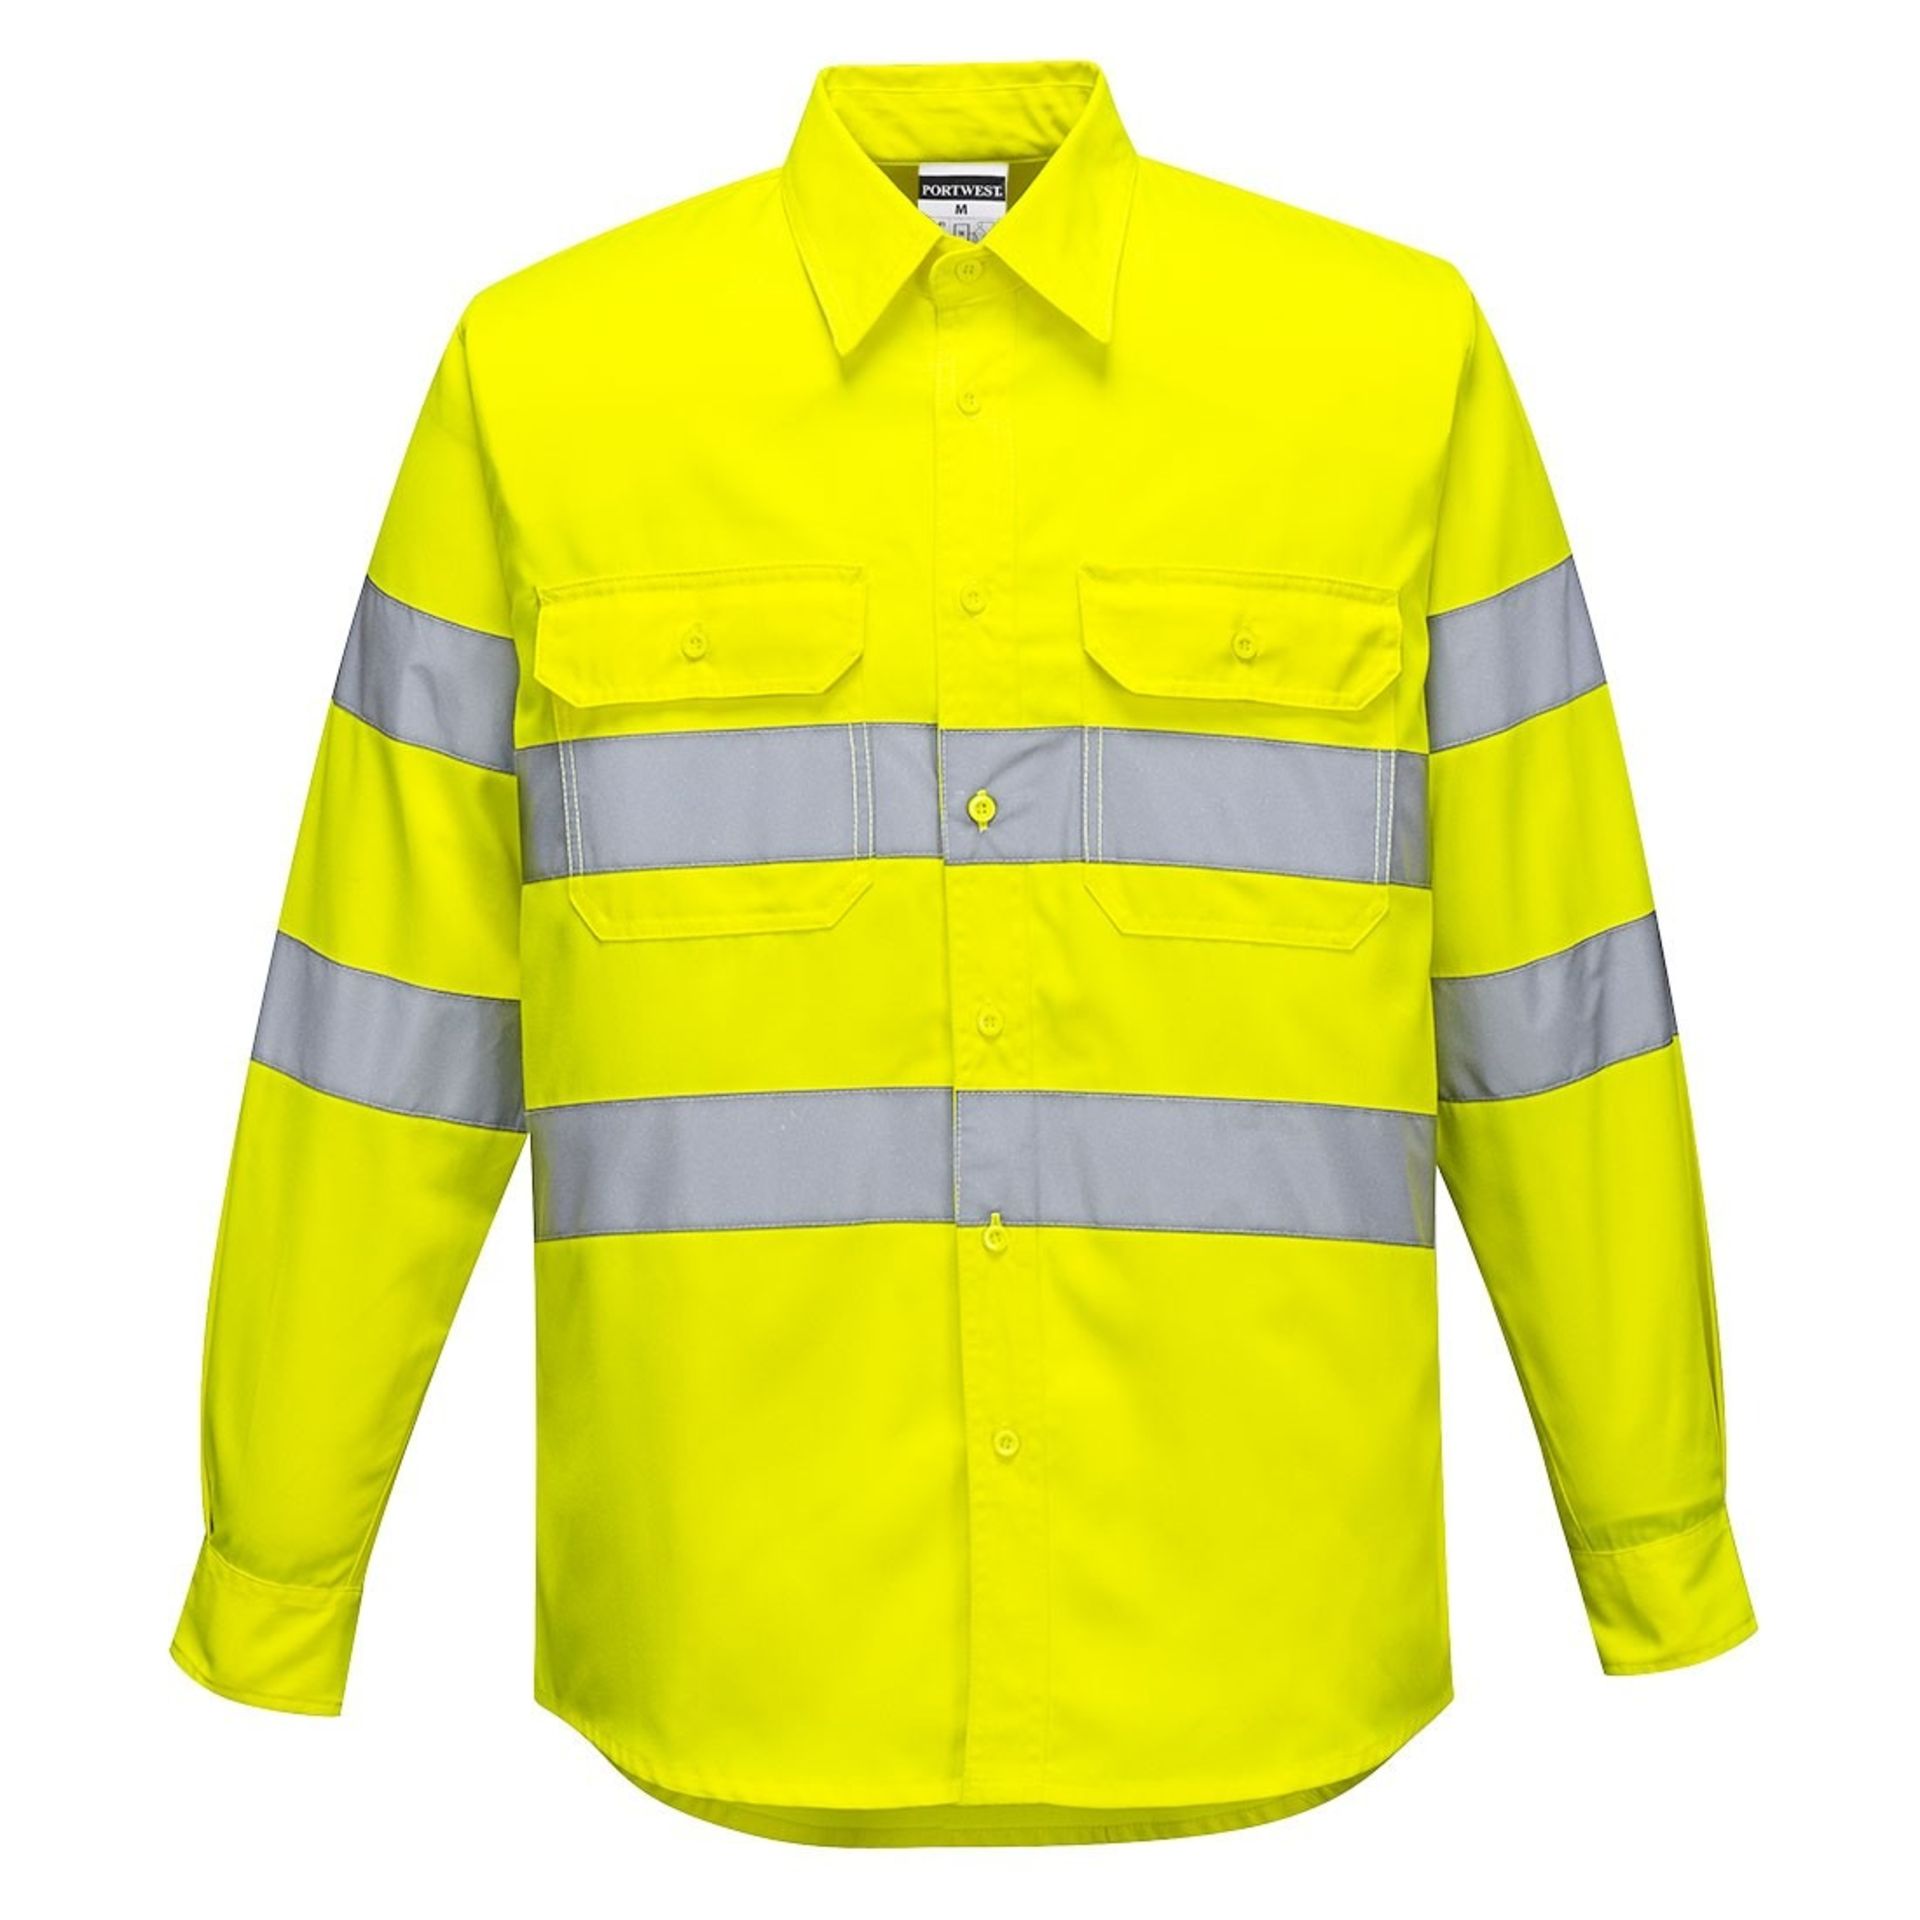 Brand New Portwest 24x Yellow Hi Vis Shirt - XXXL RRP £31.24 Each (R52)